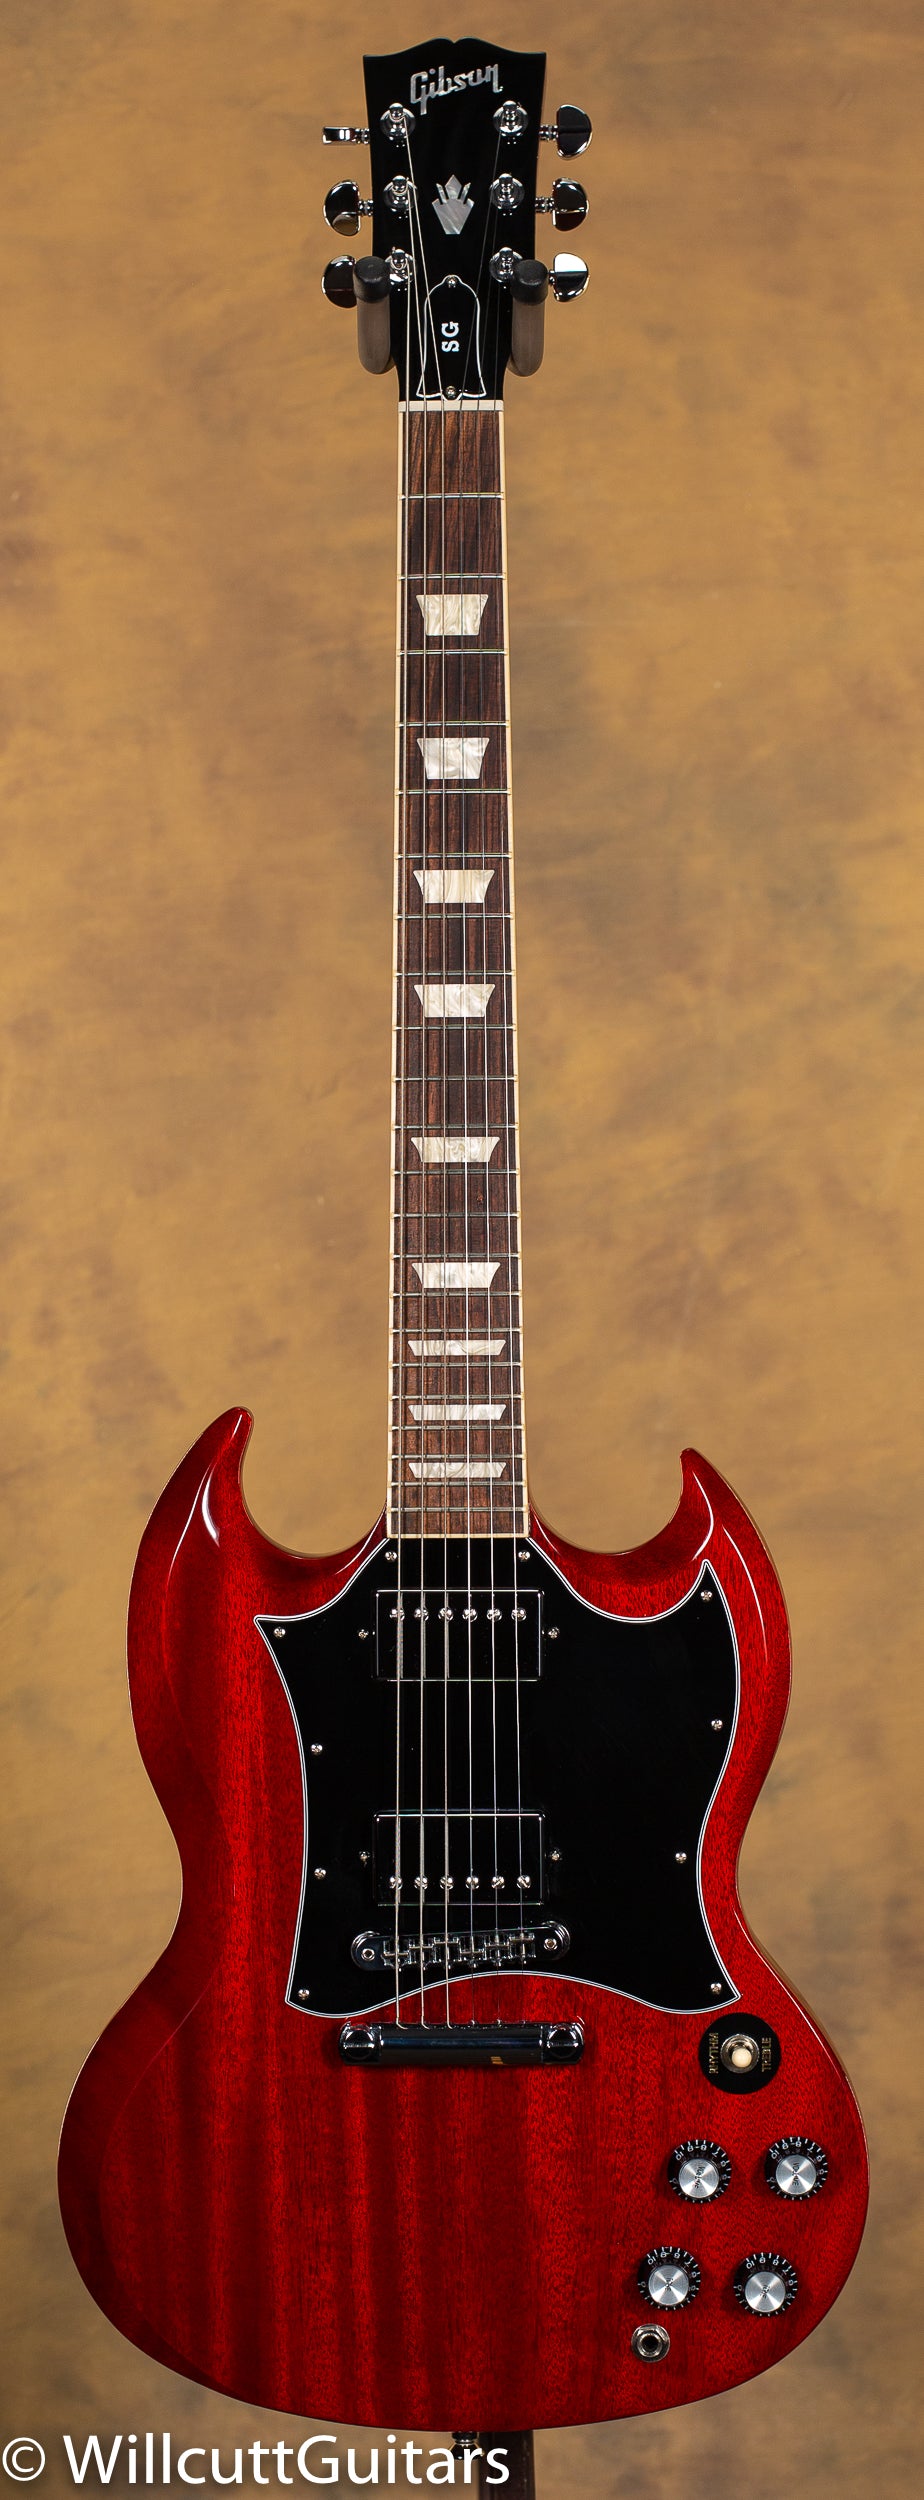 2022 Gibson SG Standard Heritage Cherry - Willcutt Guitars